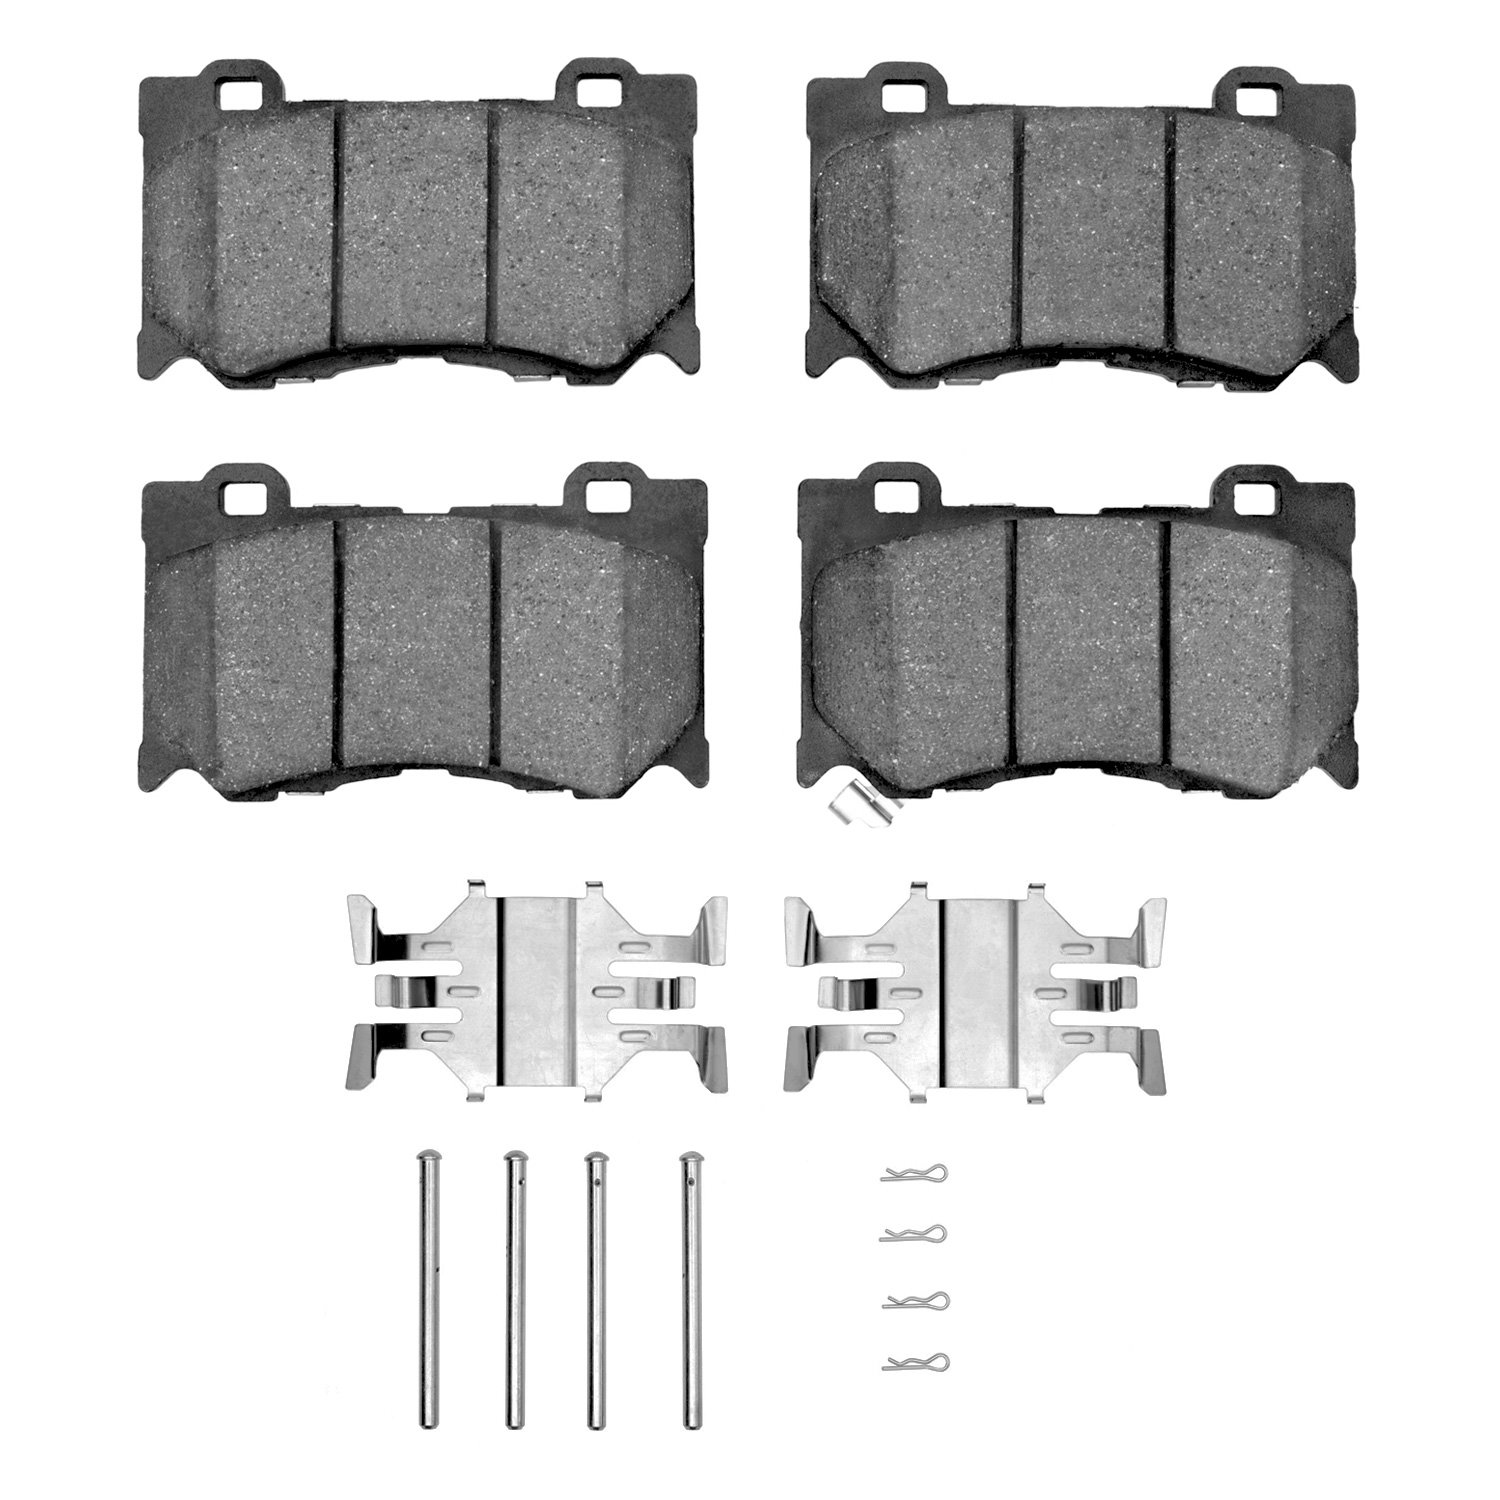 1310-1346-01 3000-Series Ceramic Brake Pads & Hardware Kit, Fits Select Infiniti/Nissan, Position: Front